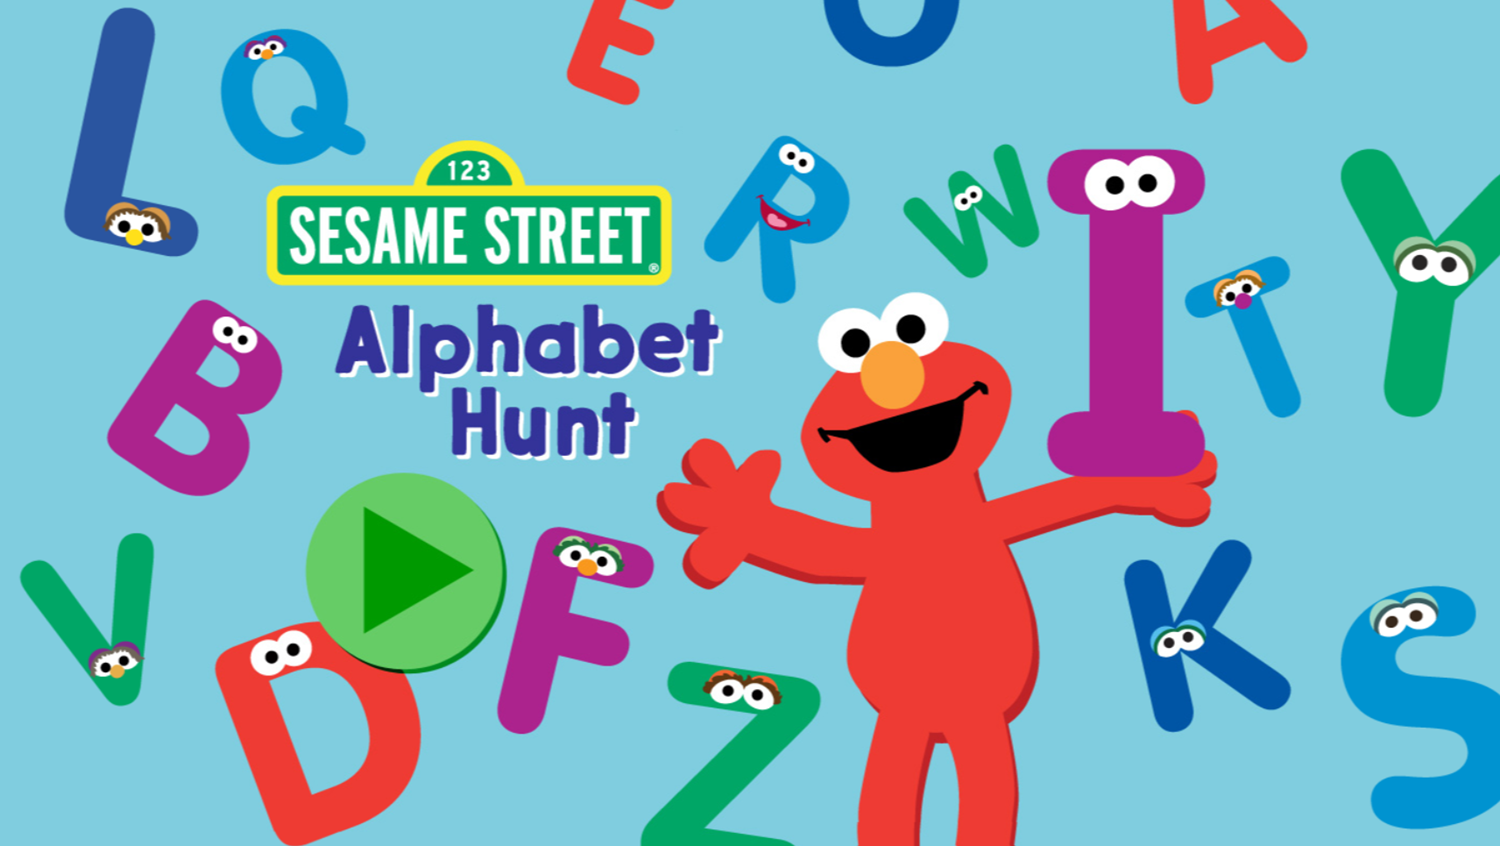 Sesame Street Alphabet Hunt Game Welcome Screen Screenshot.